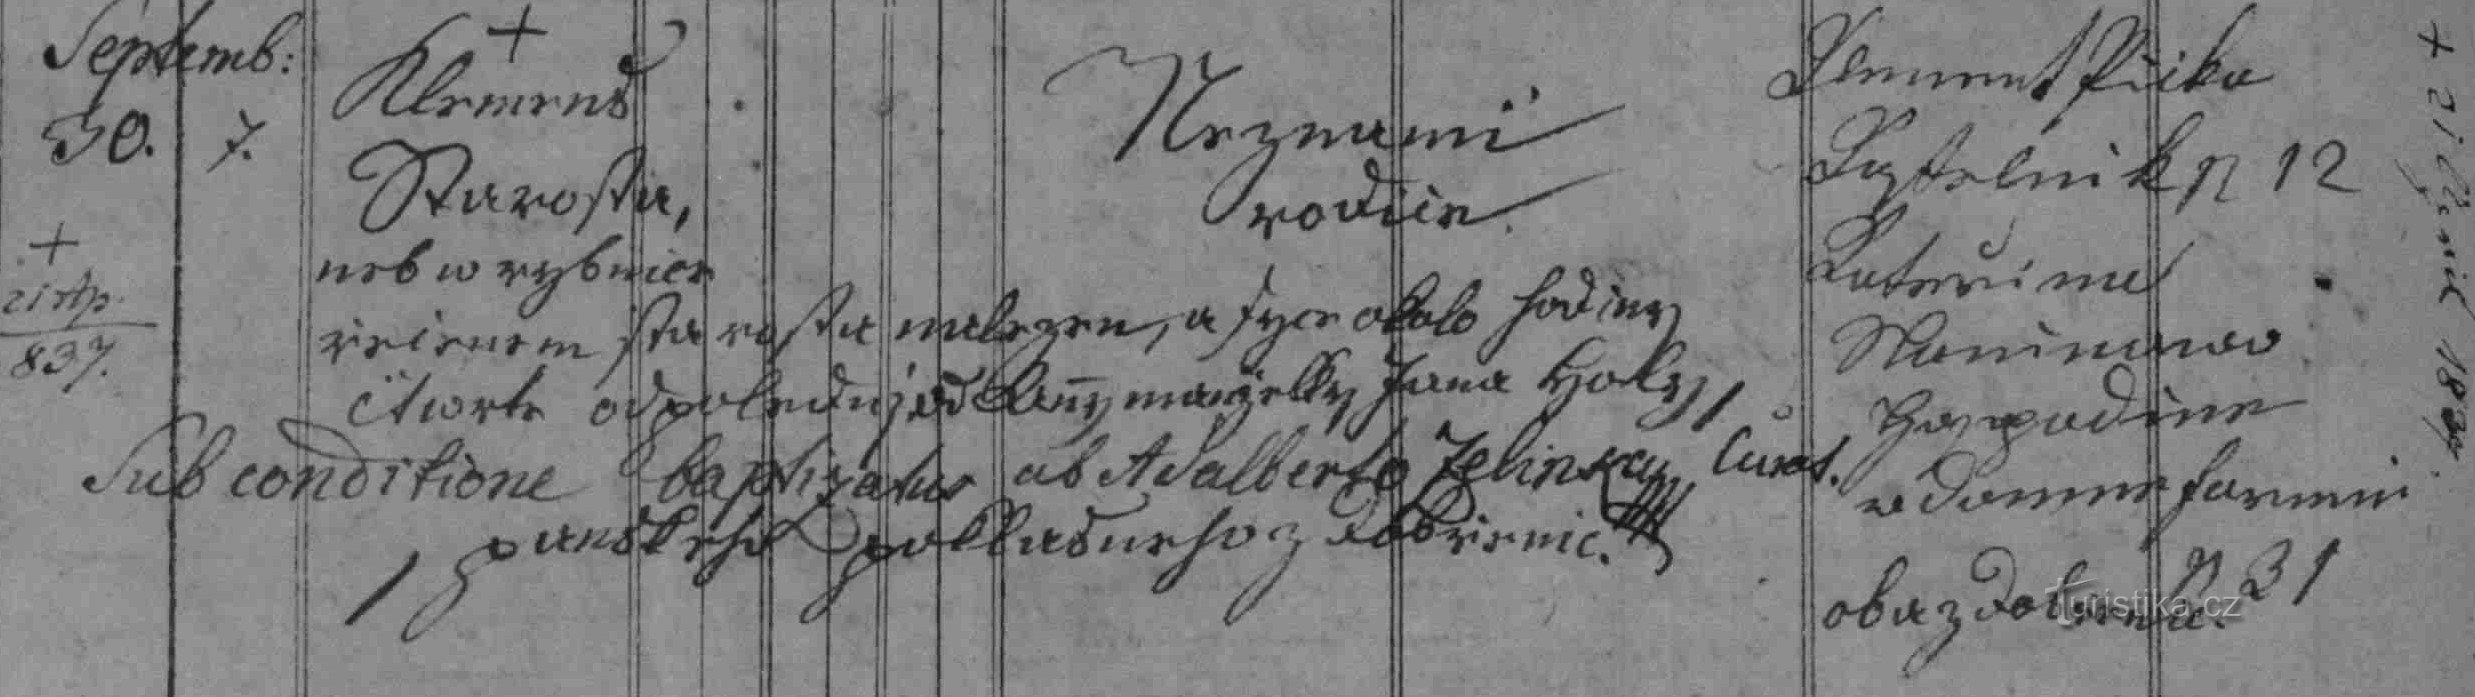 Dobření registra registro del bautismo de Klemens Starosta de 1836